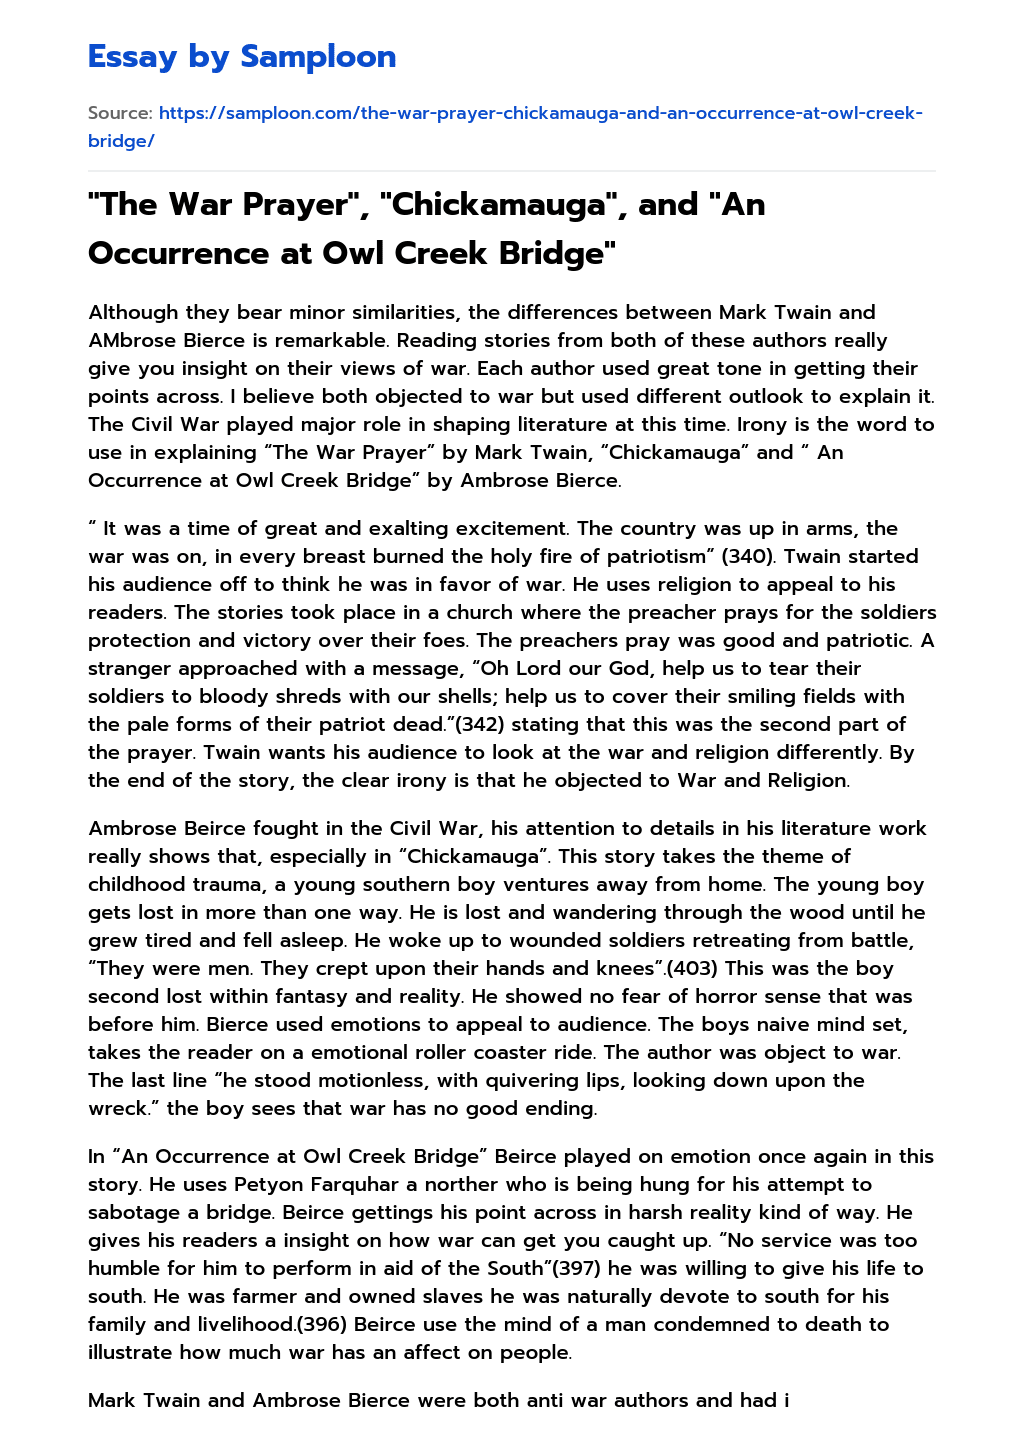 “The War Prayer”, “Chickamauga”, and “An Occurrence at Owl Creek Bridge” essay